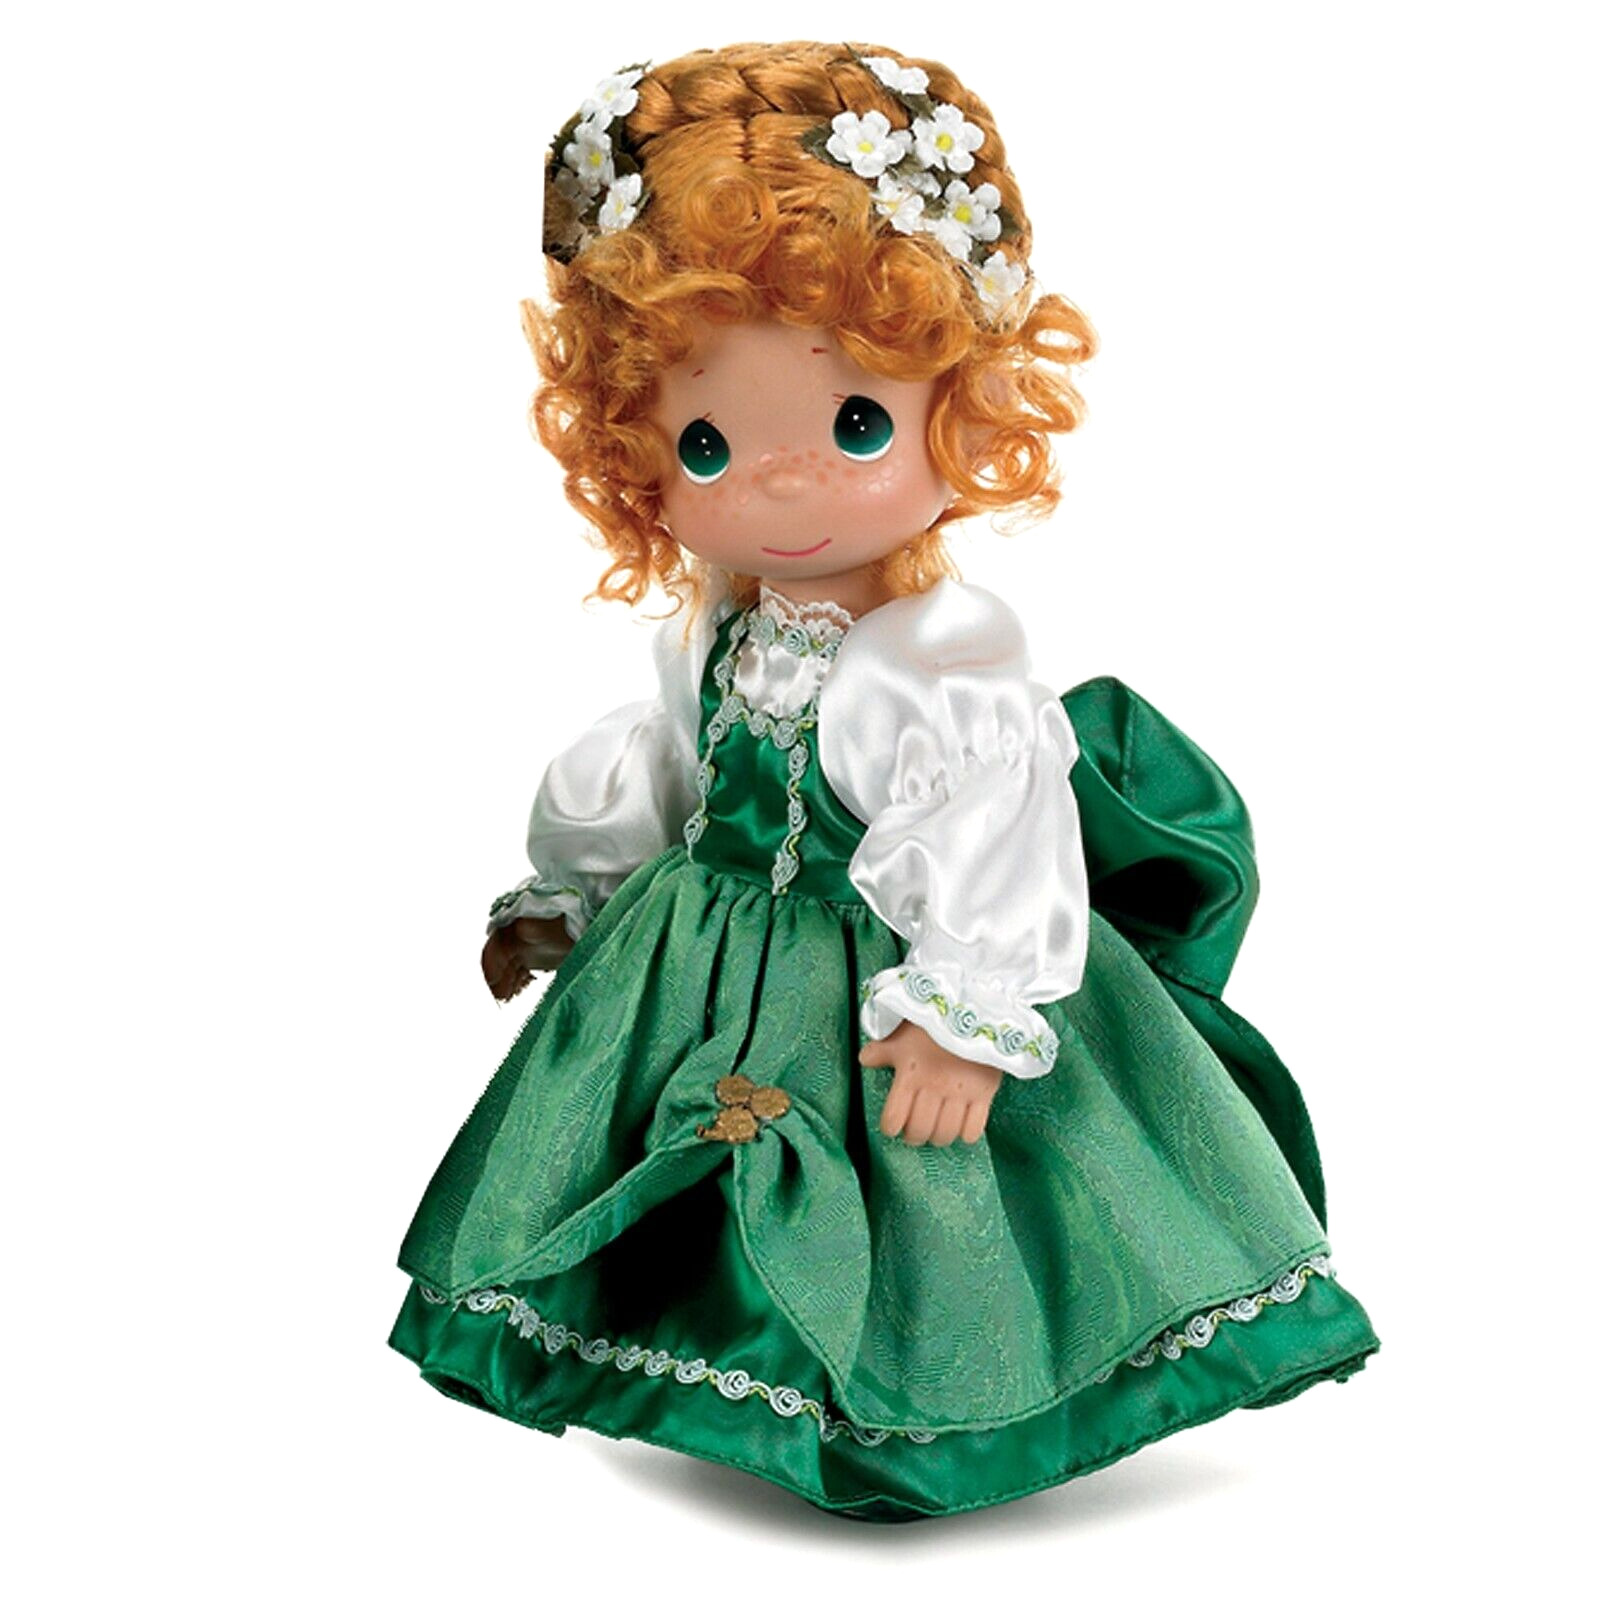 @ New PRECIOUS MOMENTS Vinyl Doll IRELAND Shamrock Clover Leaf Costume Green